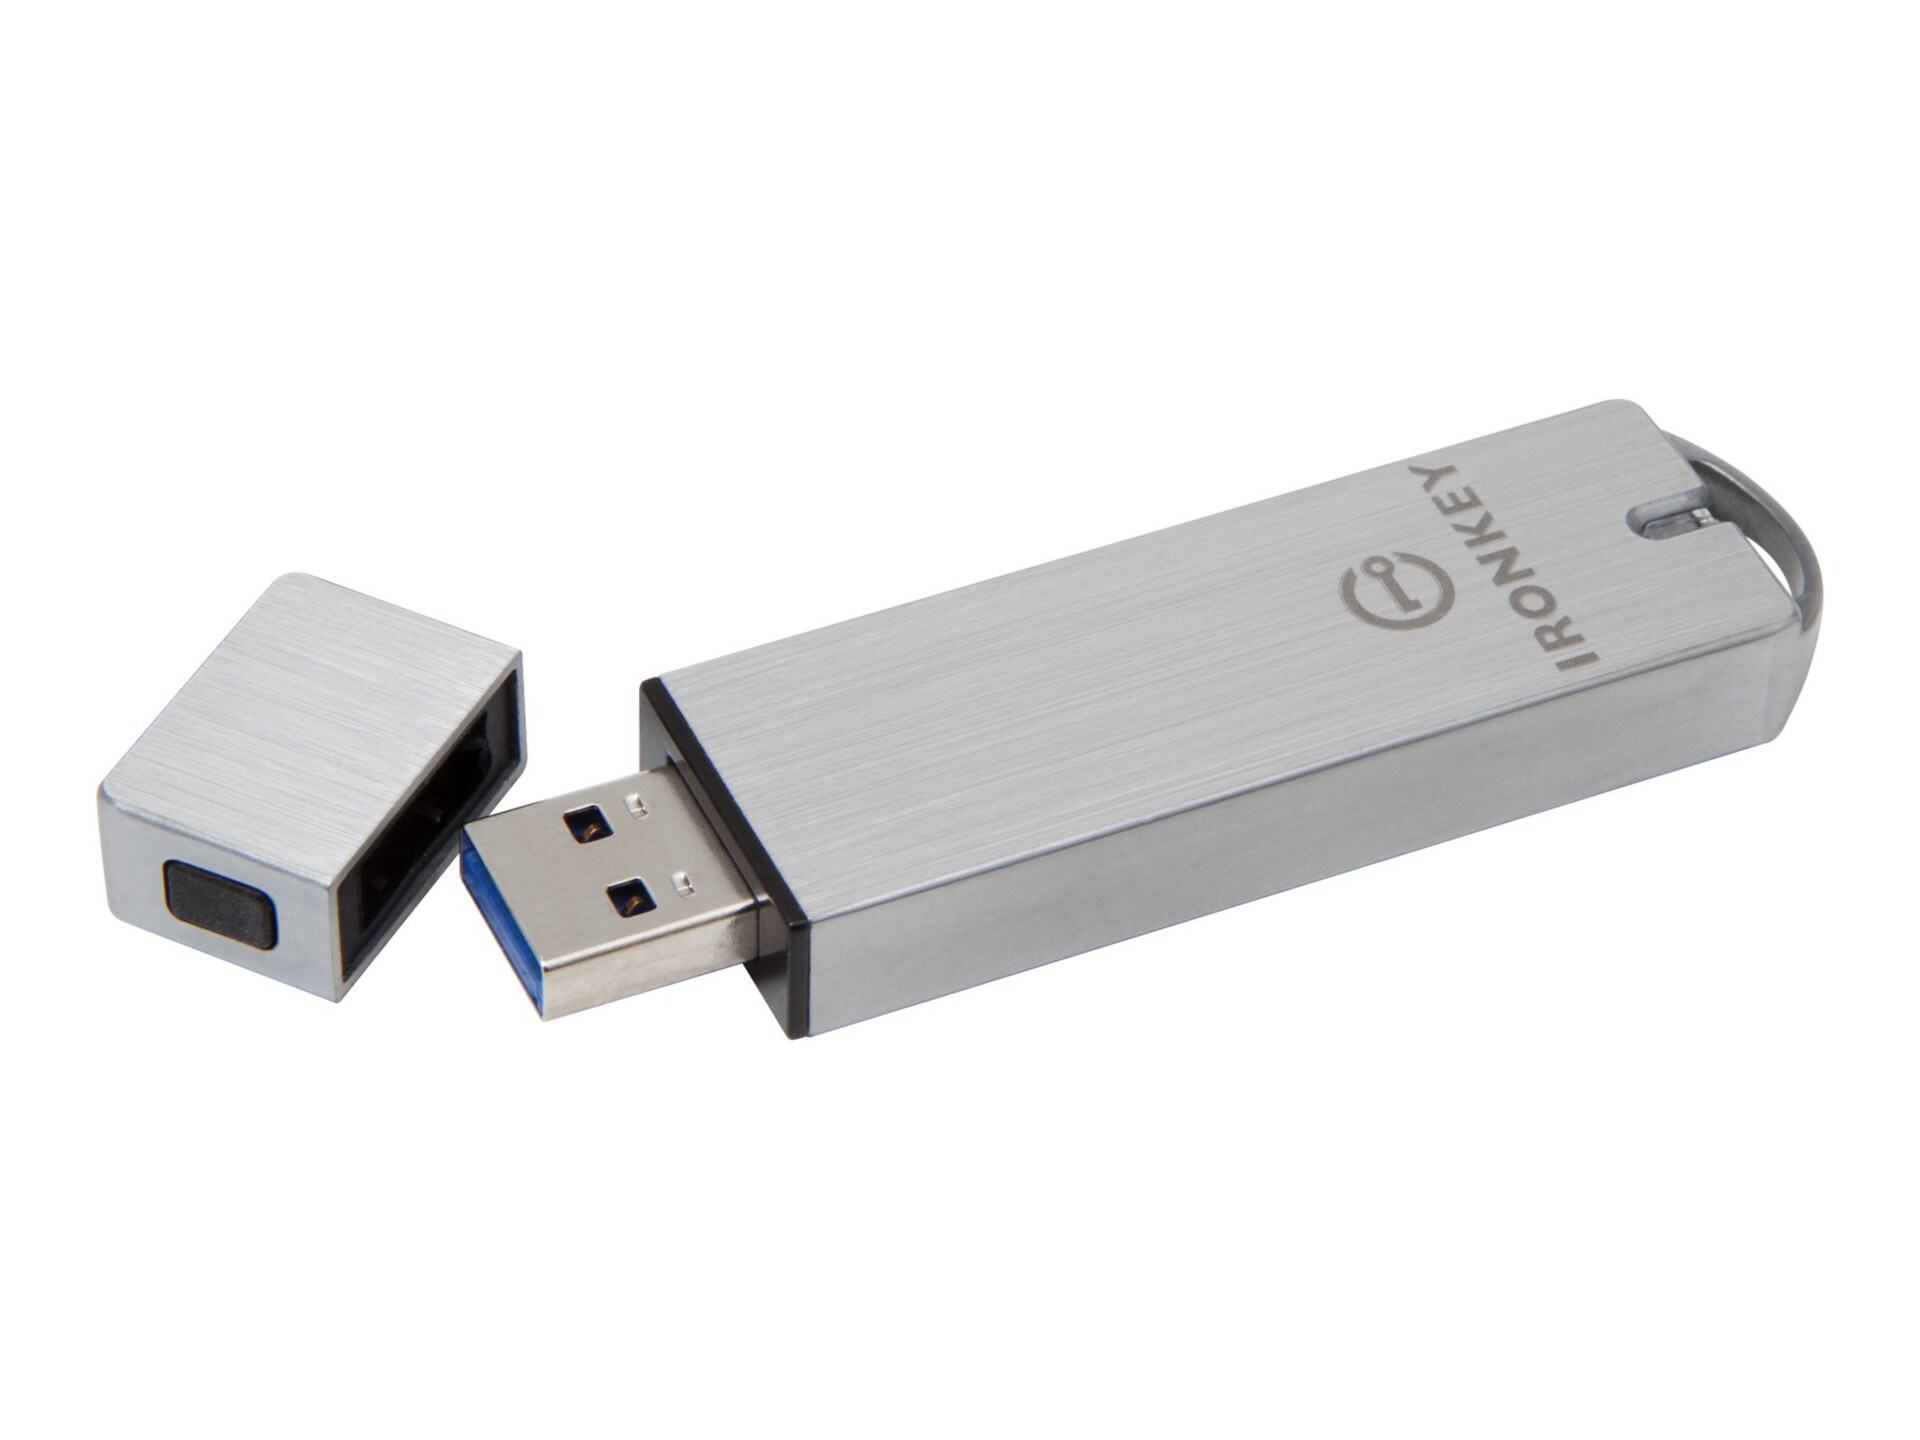 IronKey Enterprise S1000 - USB flash drive - 128 GB - TAA Compliant